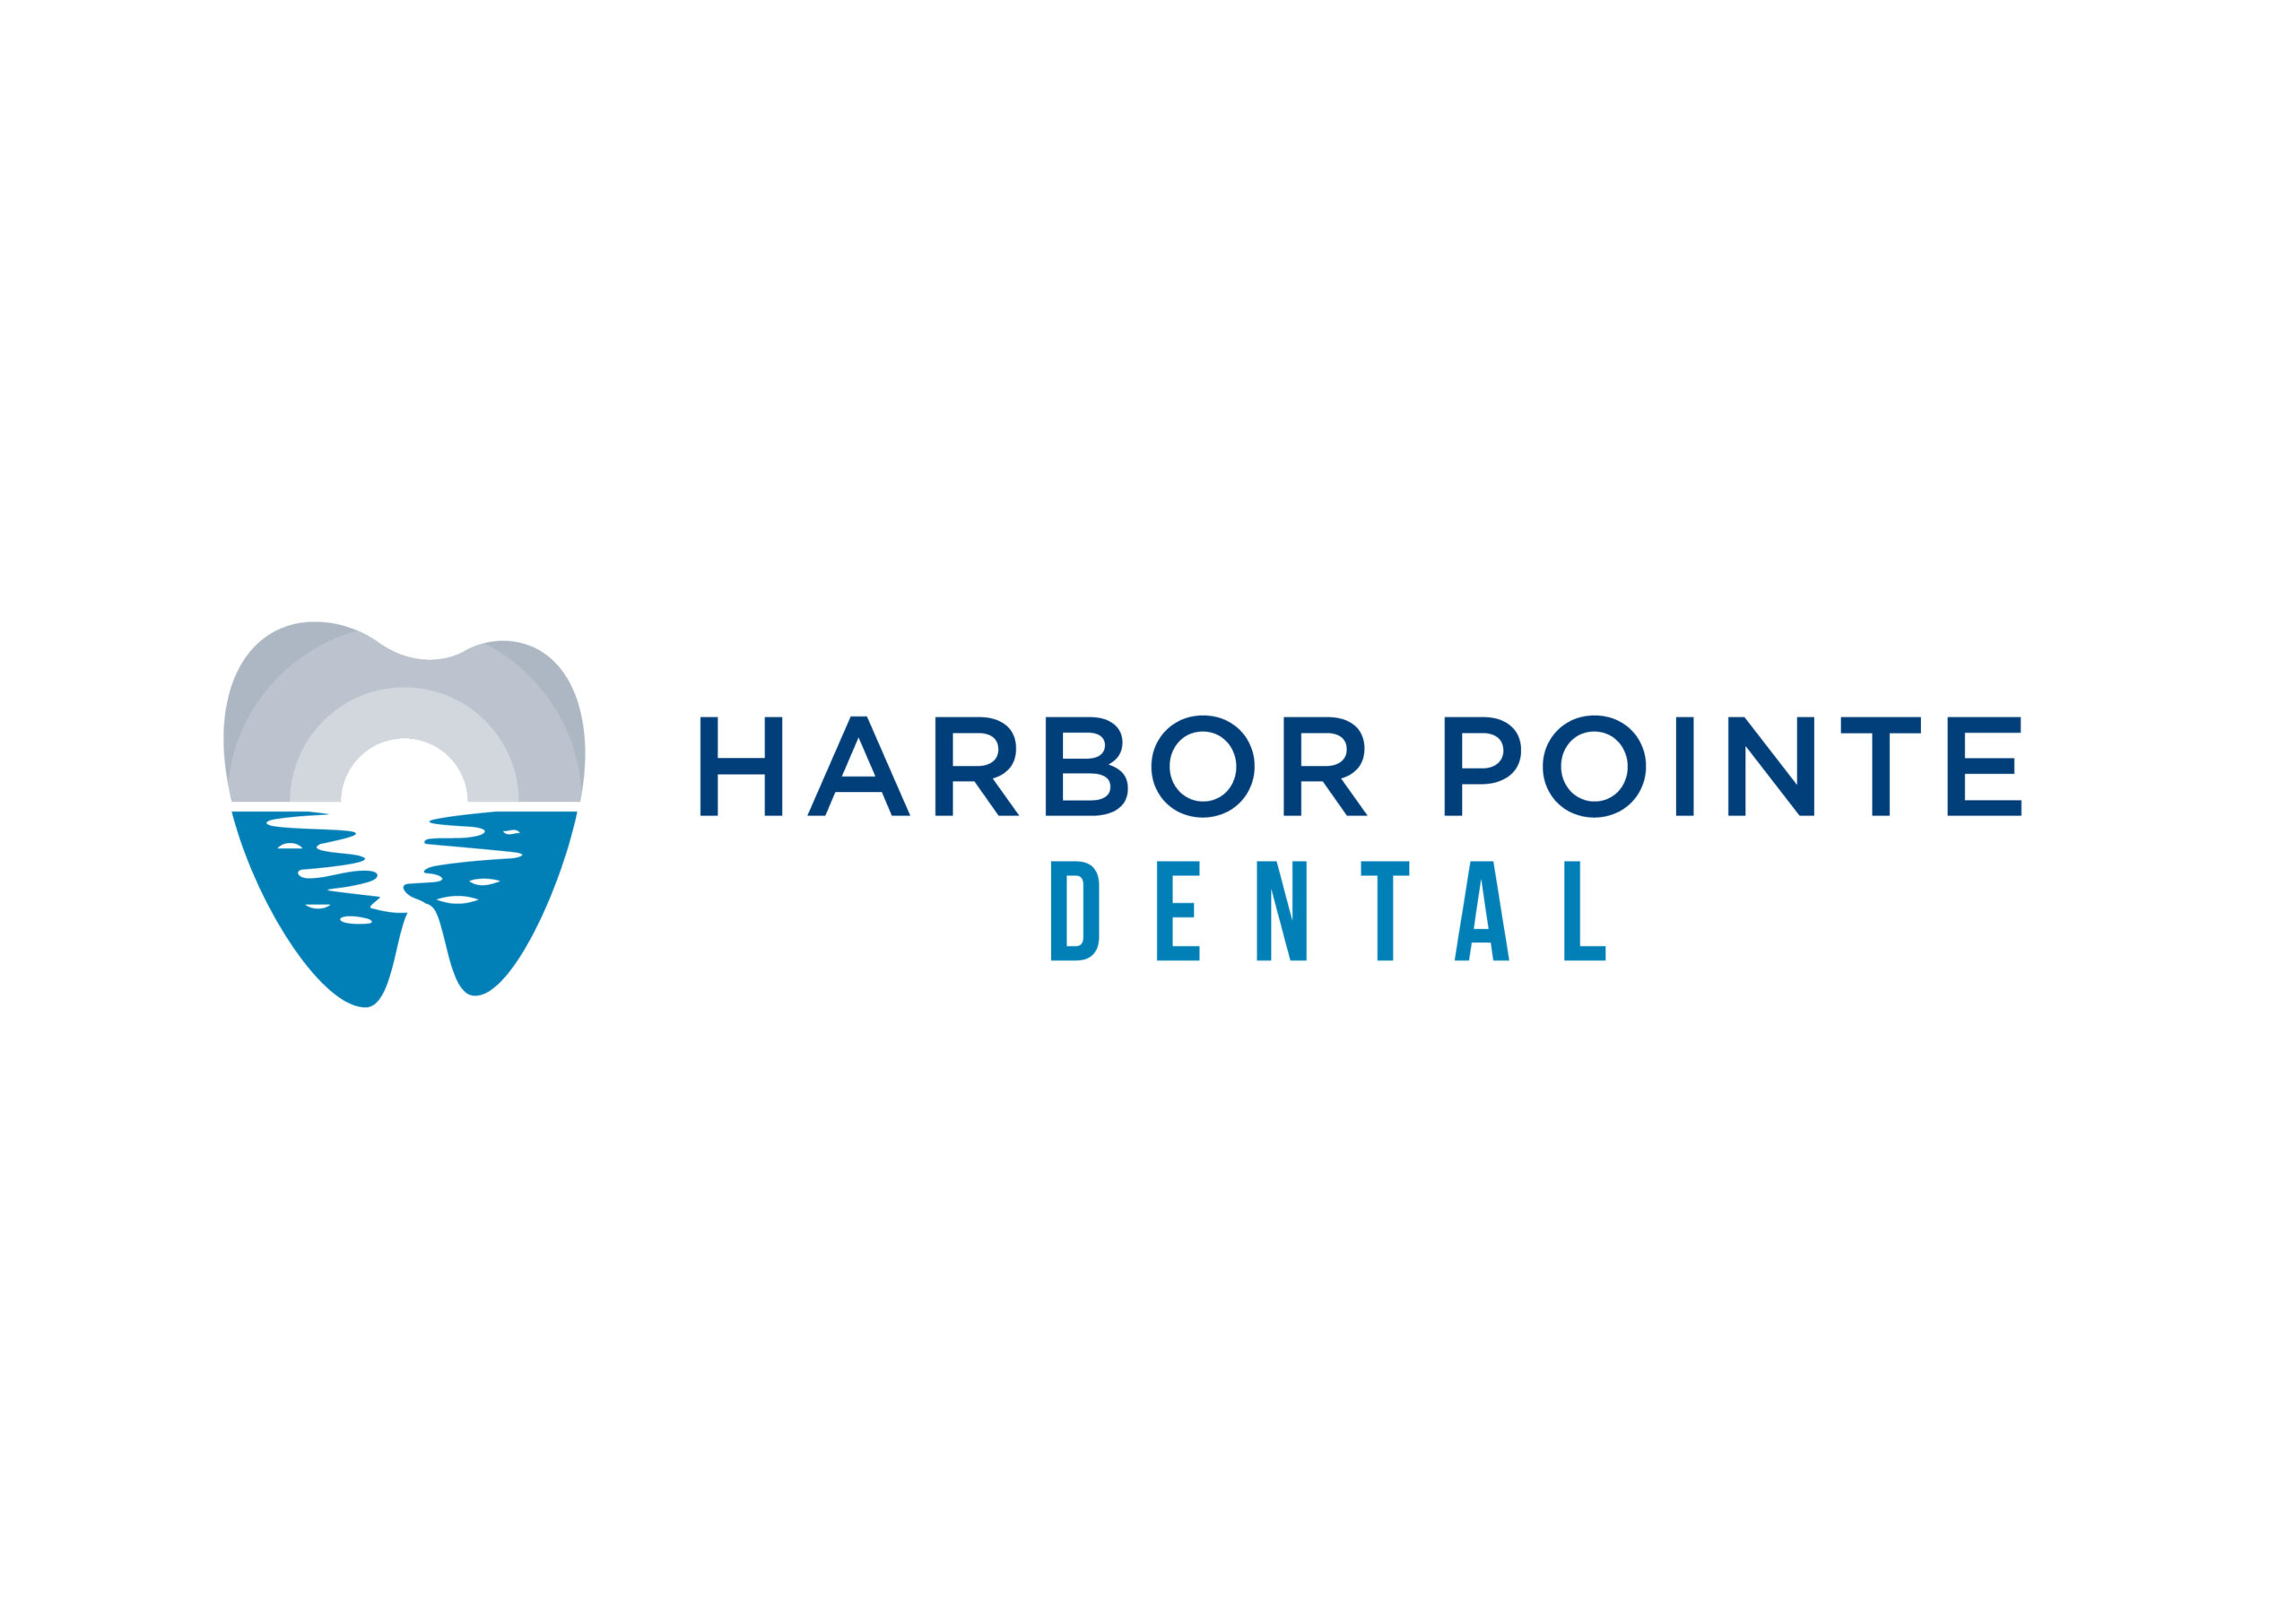 Harbor Pointe Dental